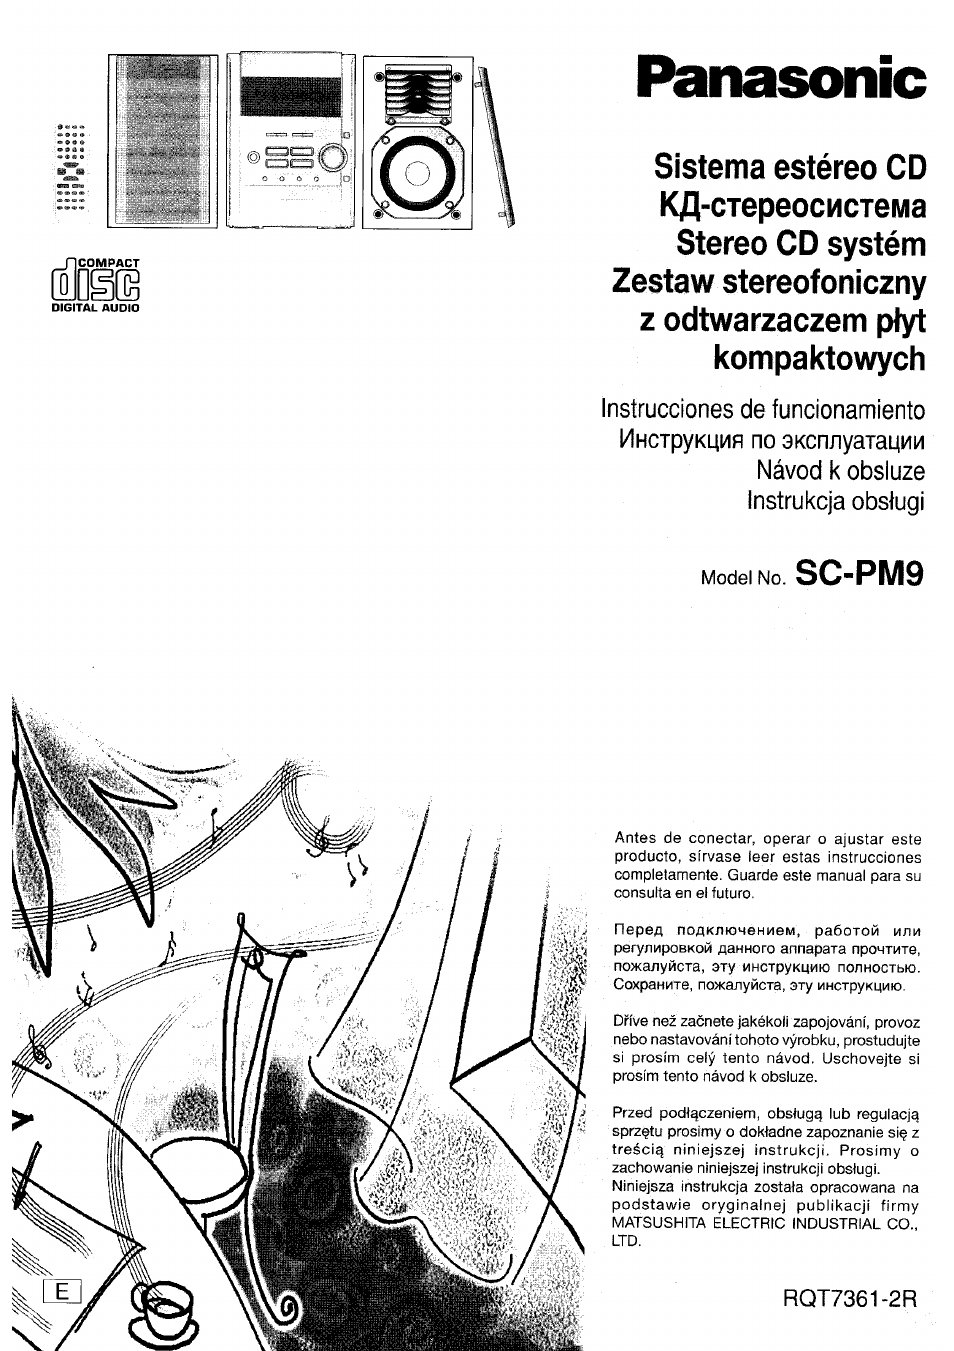 Инструкция по эксплуатации Panasonic SC-PM9 | 41 cтраница